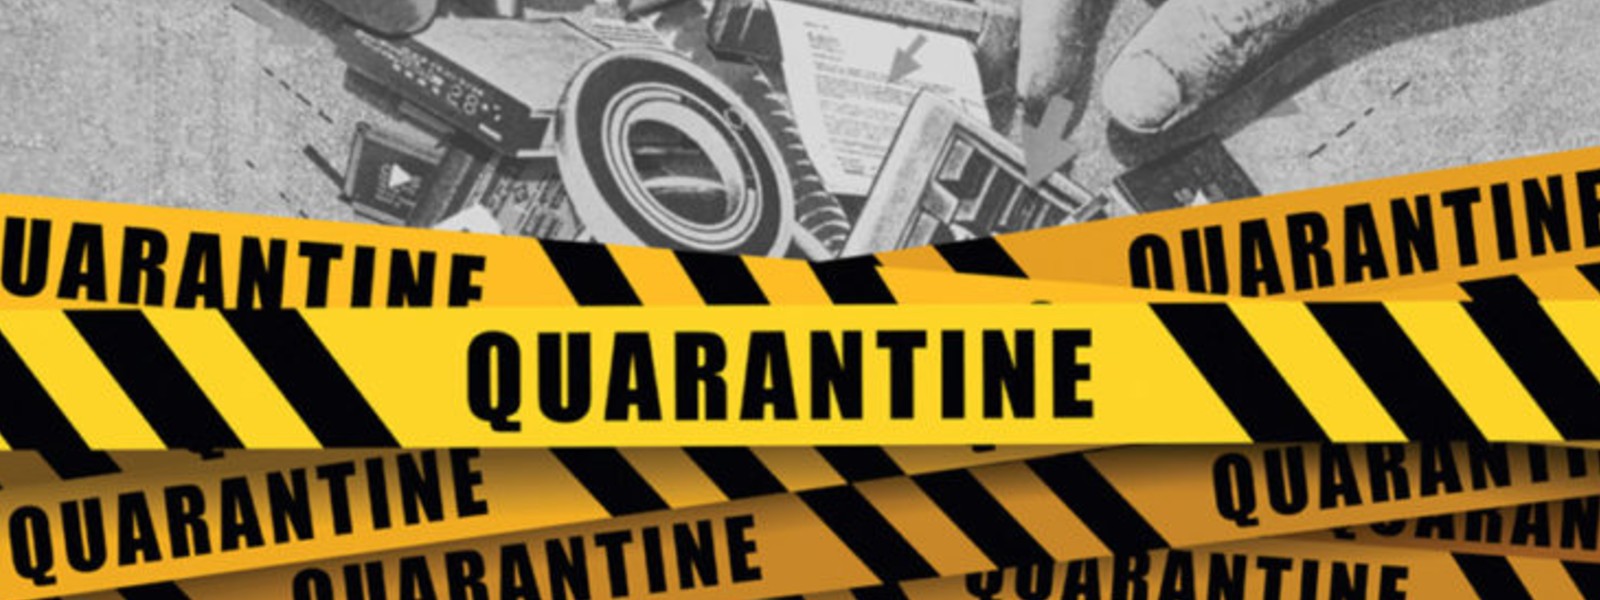 6,901 people in 67 tri-service-managed QCs are still in quarantine.